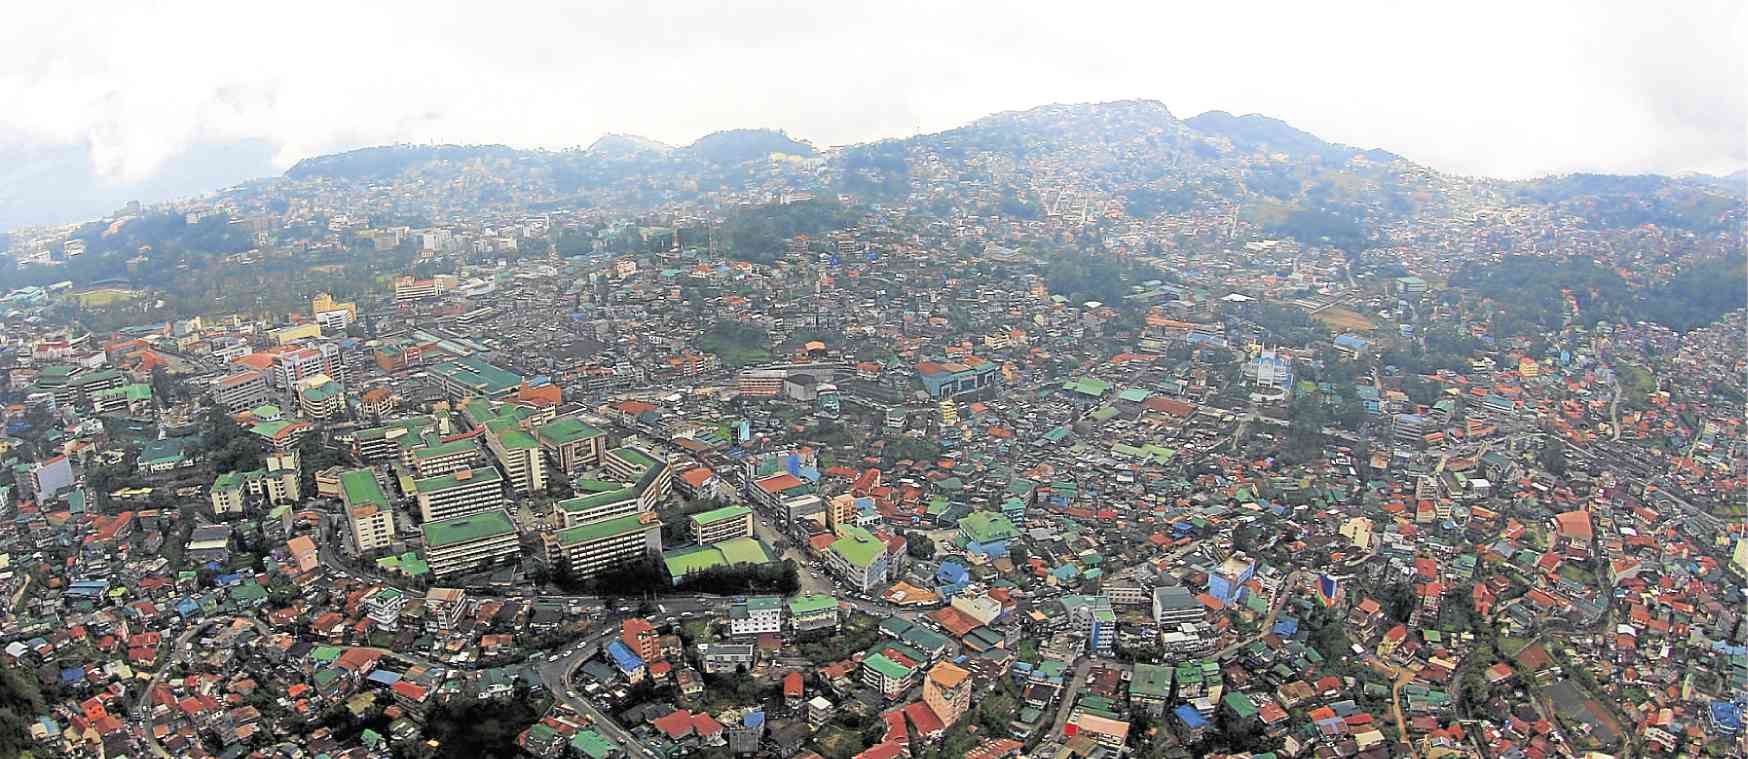 DILG backs moratorium on high-rise buildings in Baguio